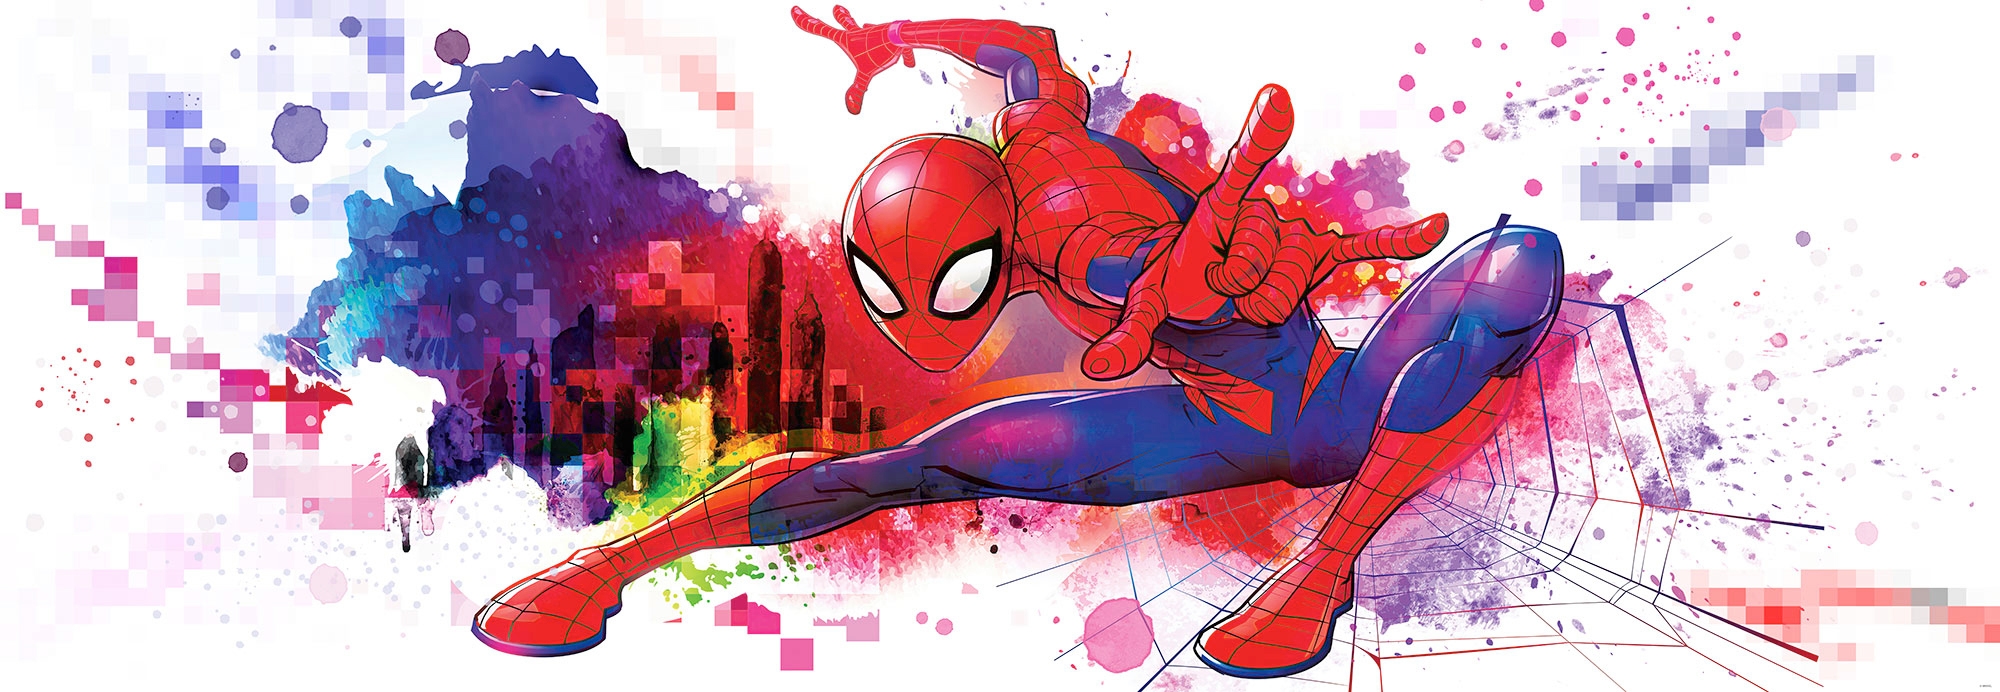 Fototapete »Spider-Man Graffiti Art«, 368x127 cm (Breite x Höhe), inklusive Kleister